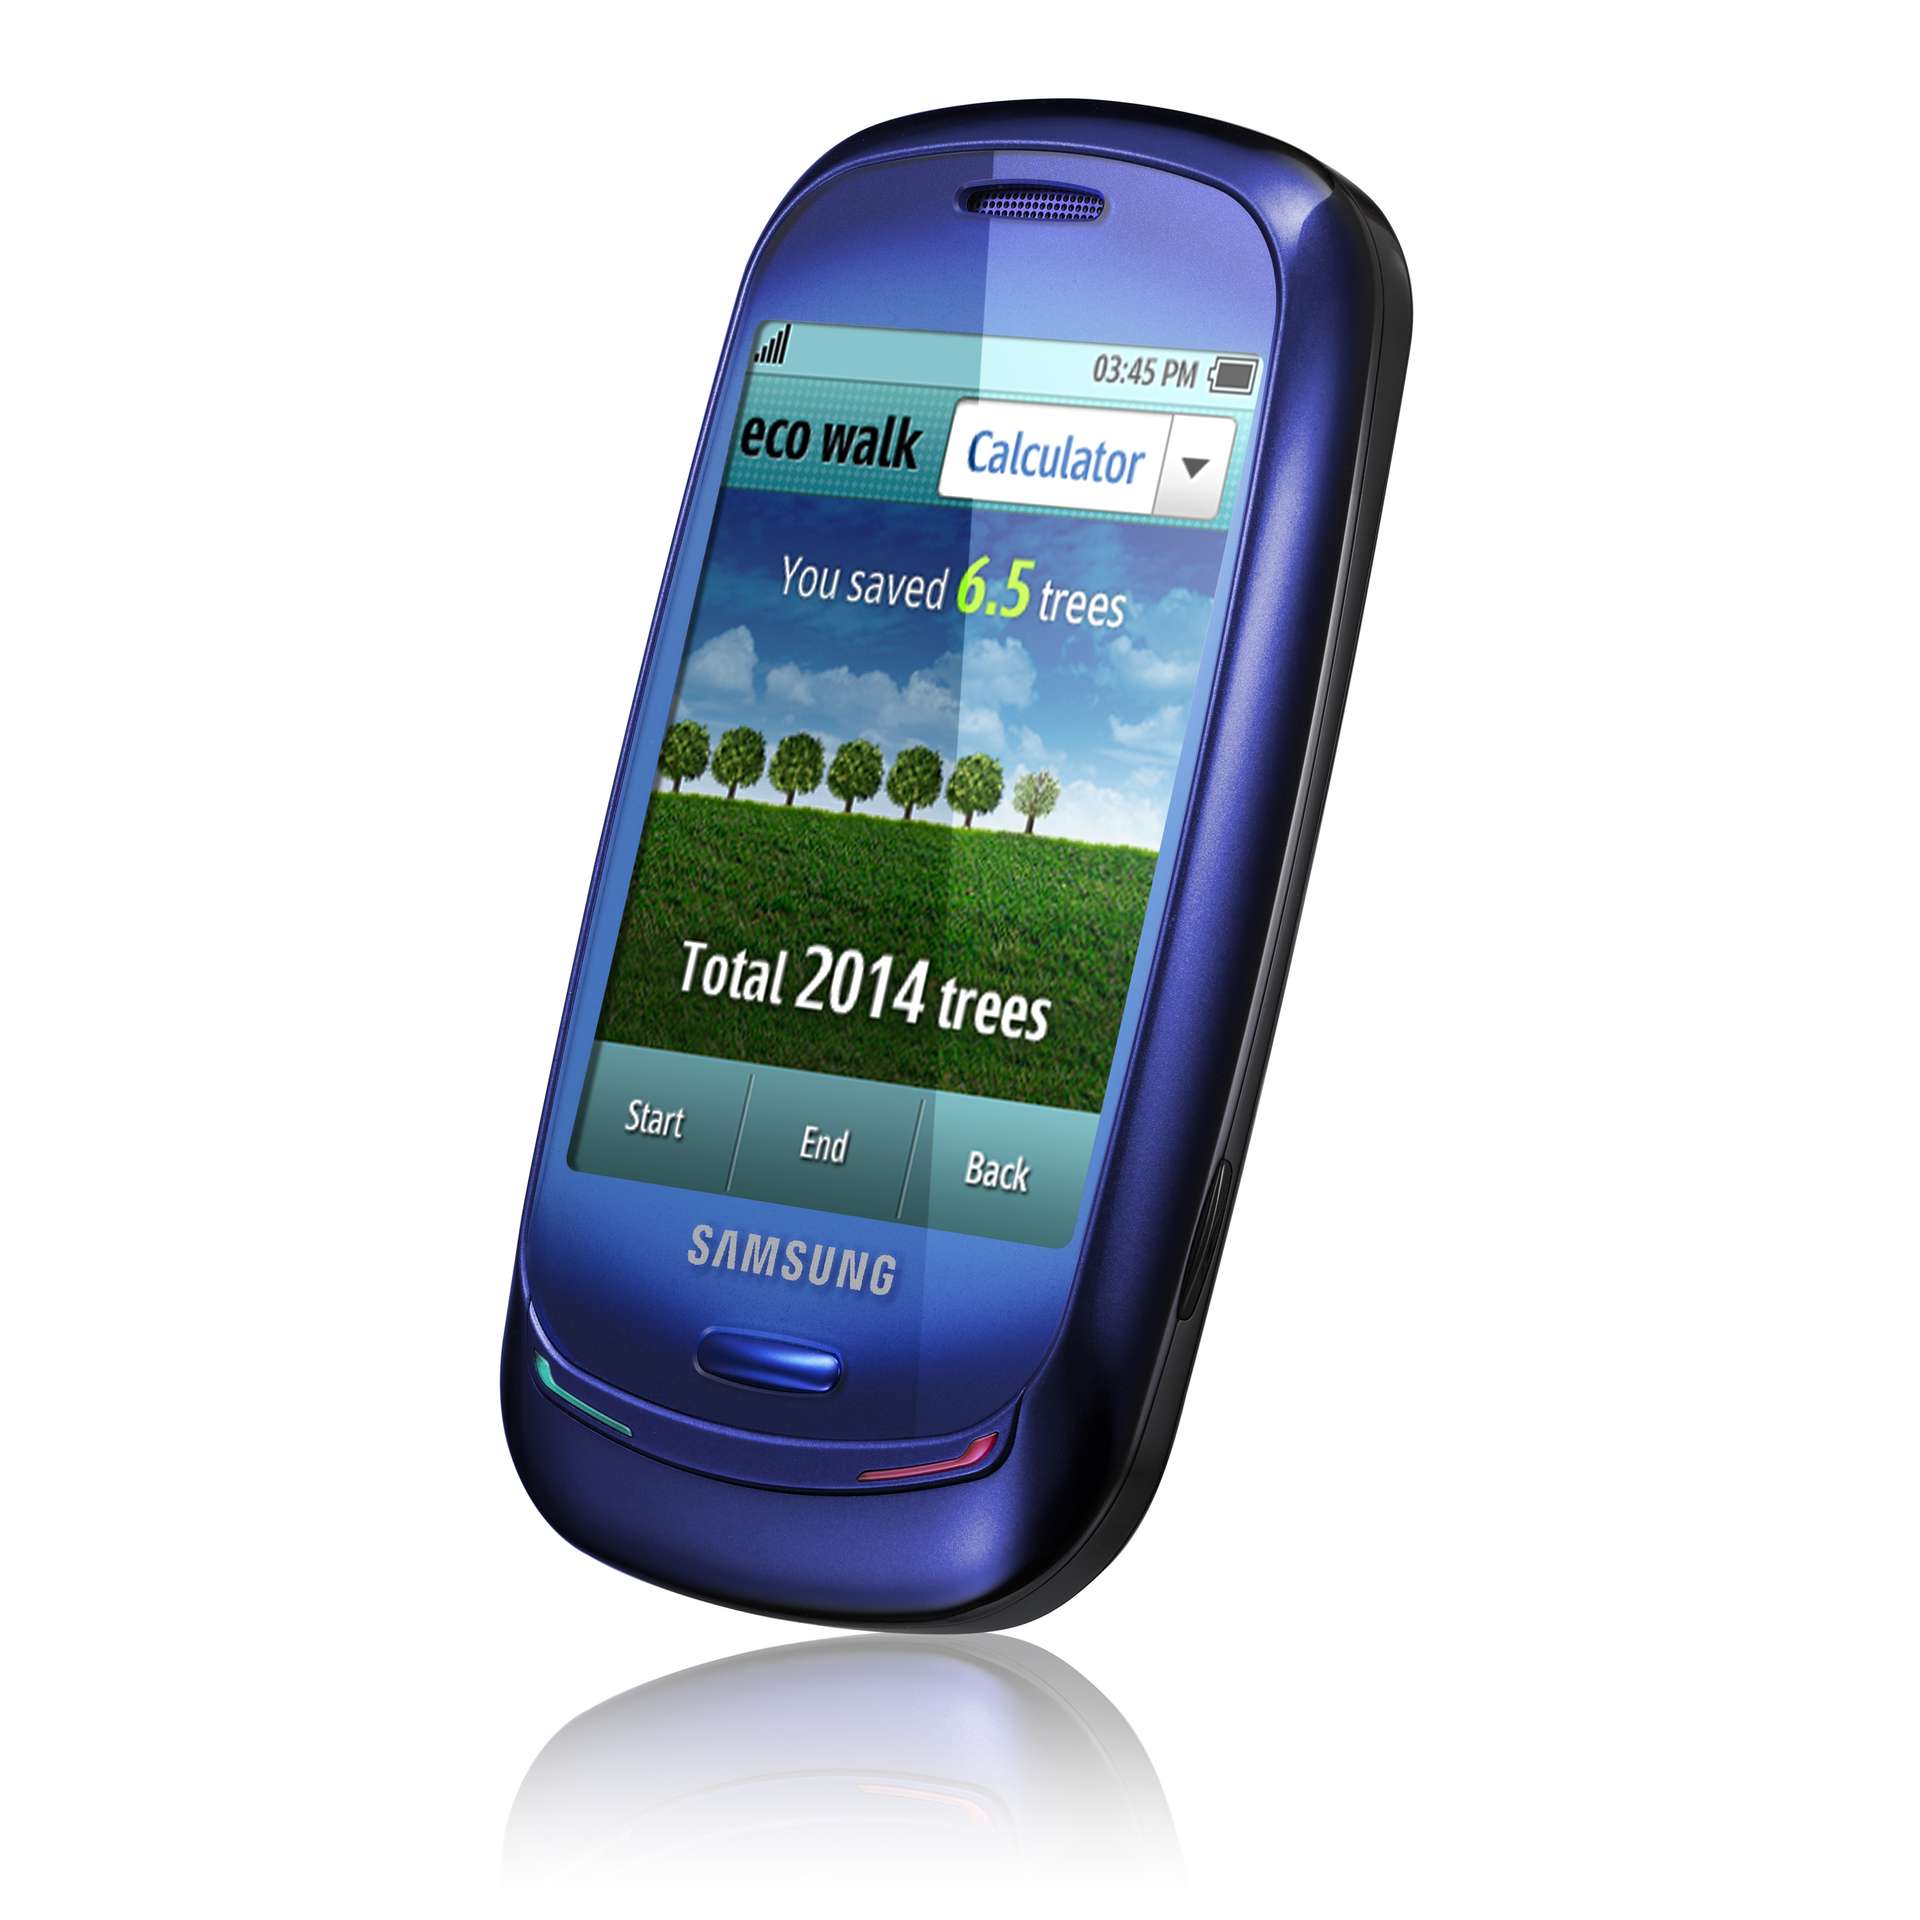 Телефон самсунг сенсорный цены. Samsung Blue Earth s7550. Samsung java сенсорный. Первый сенсорный самсунг. Первые сенсорные телефоны самсунг.